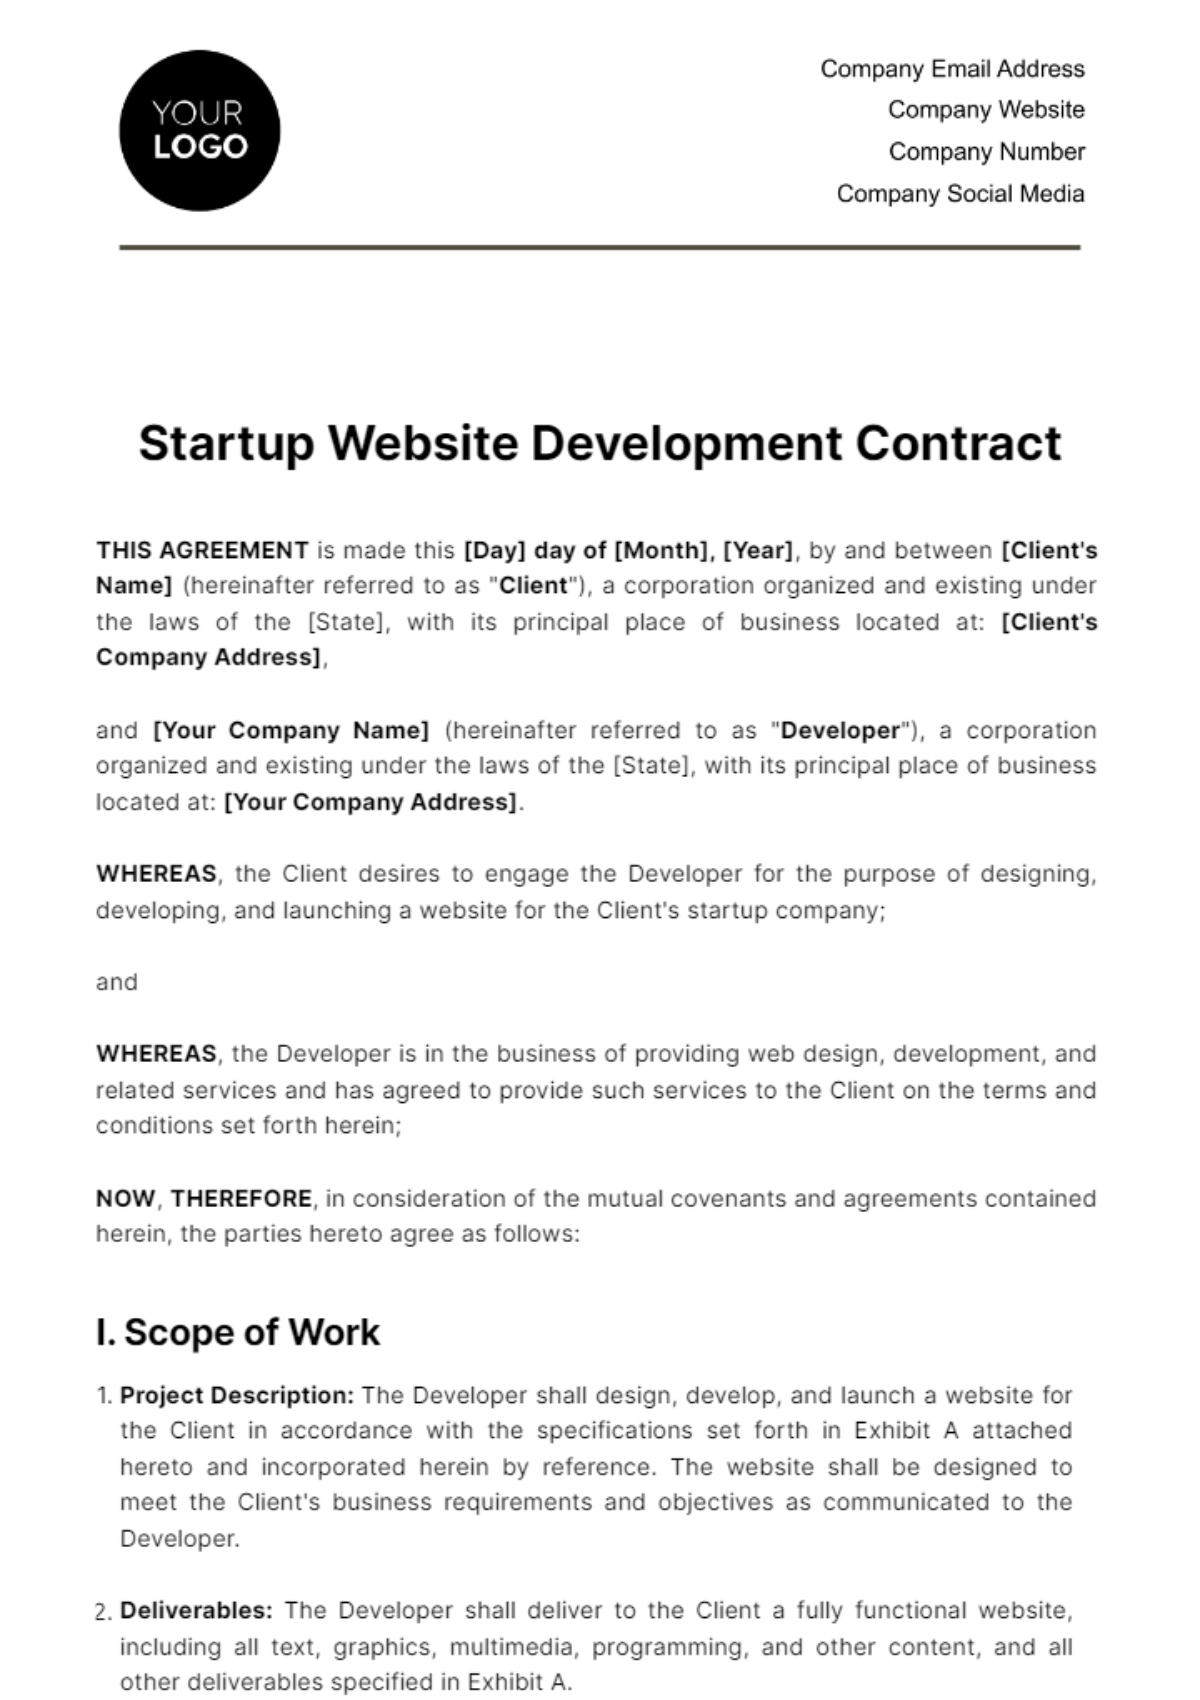 Free Startup Website Development Contract Template